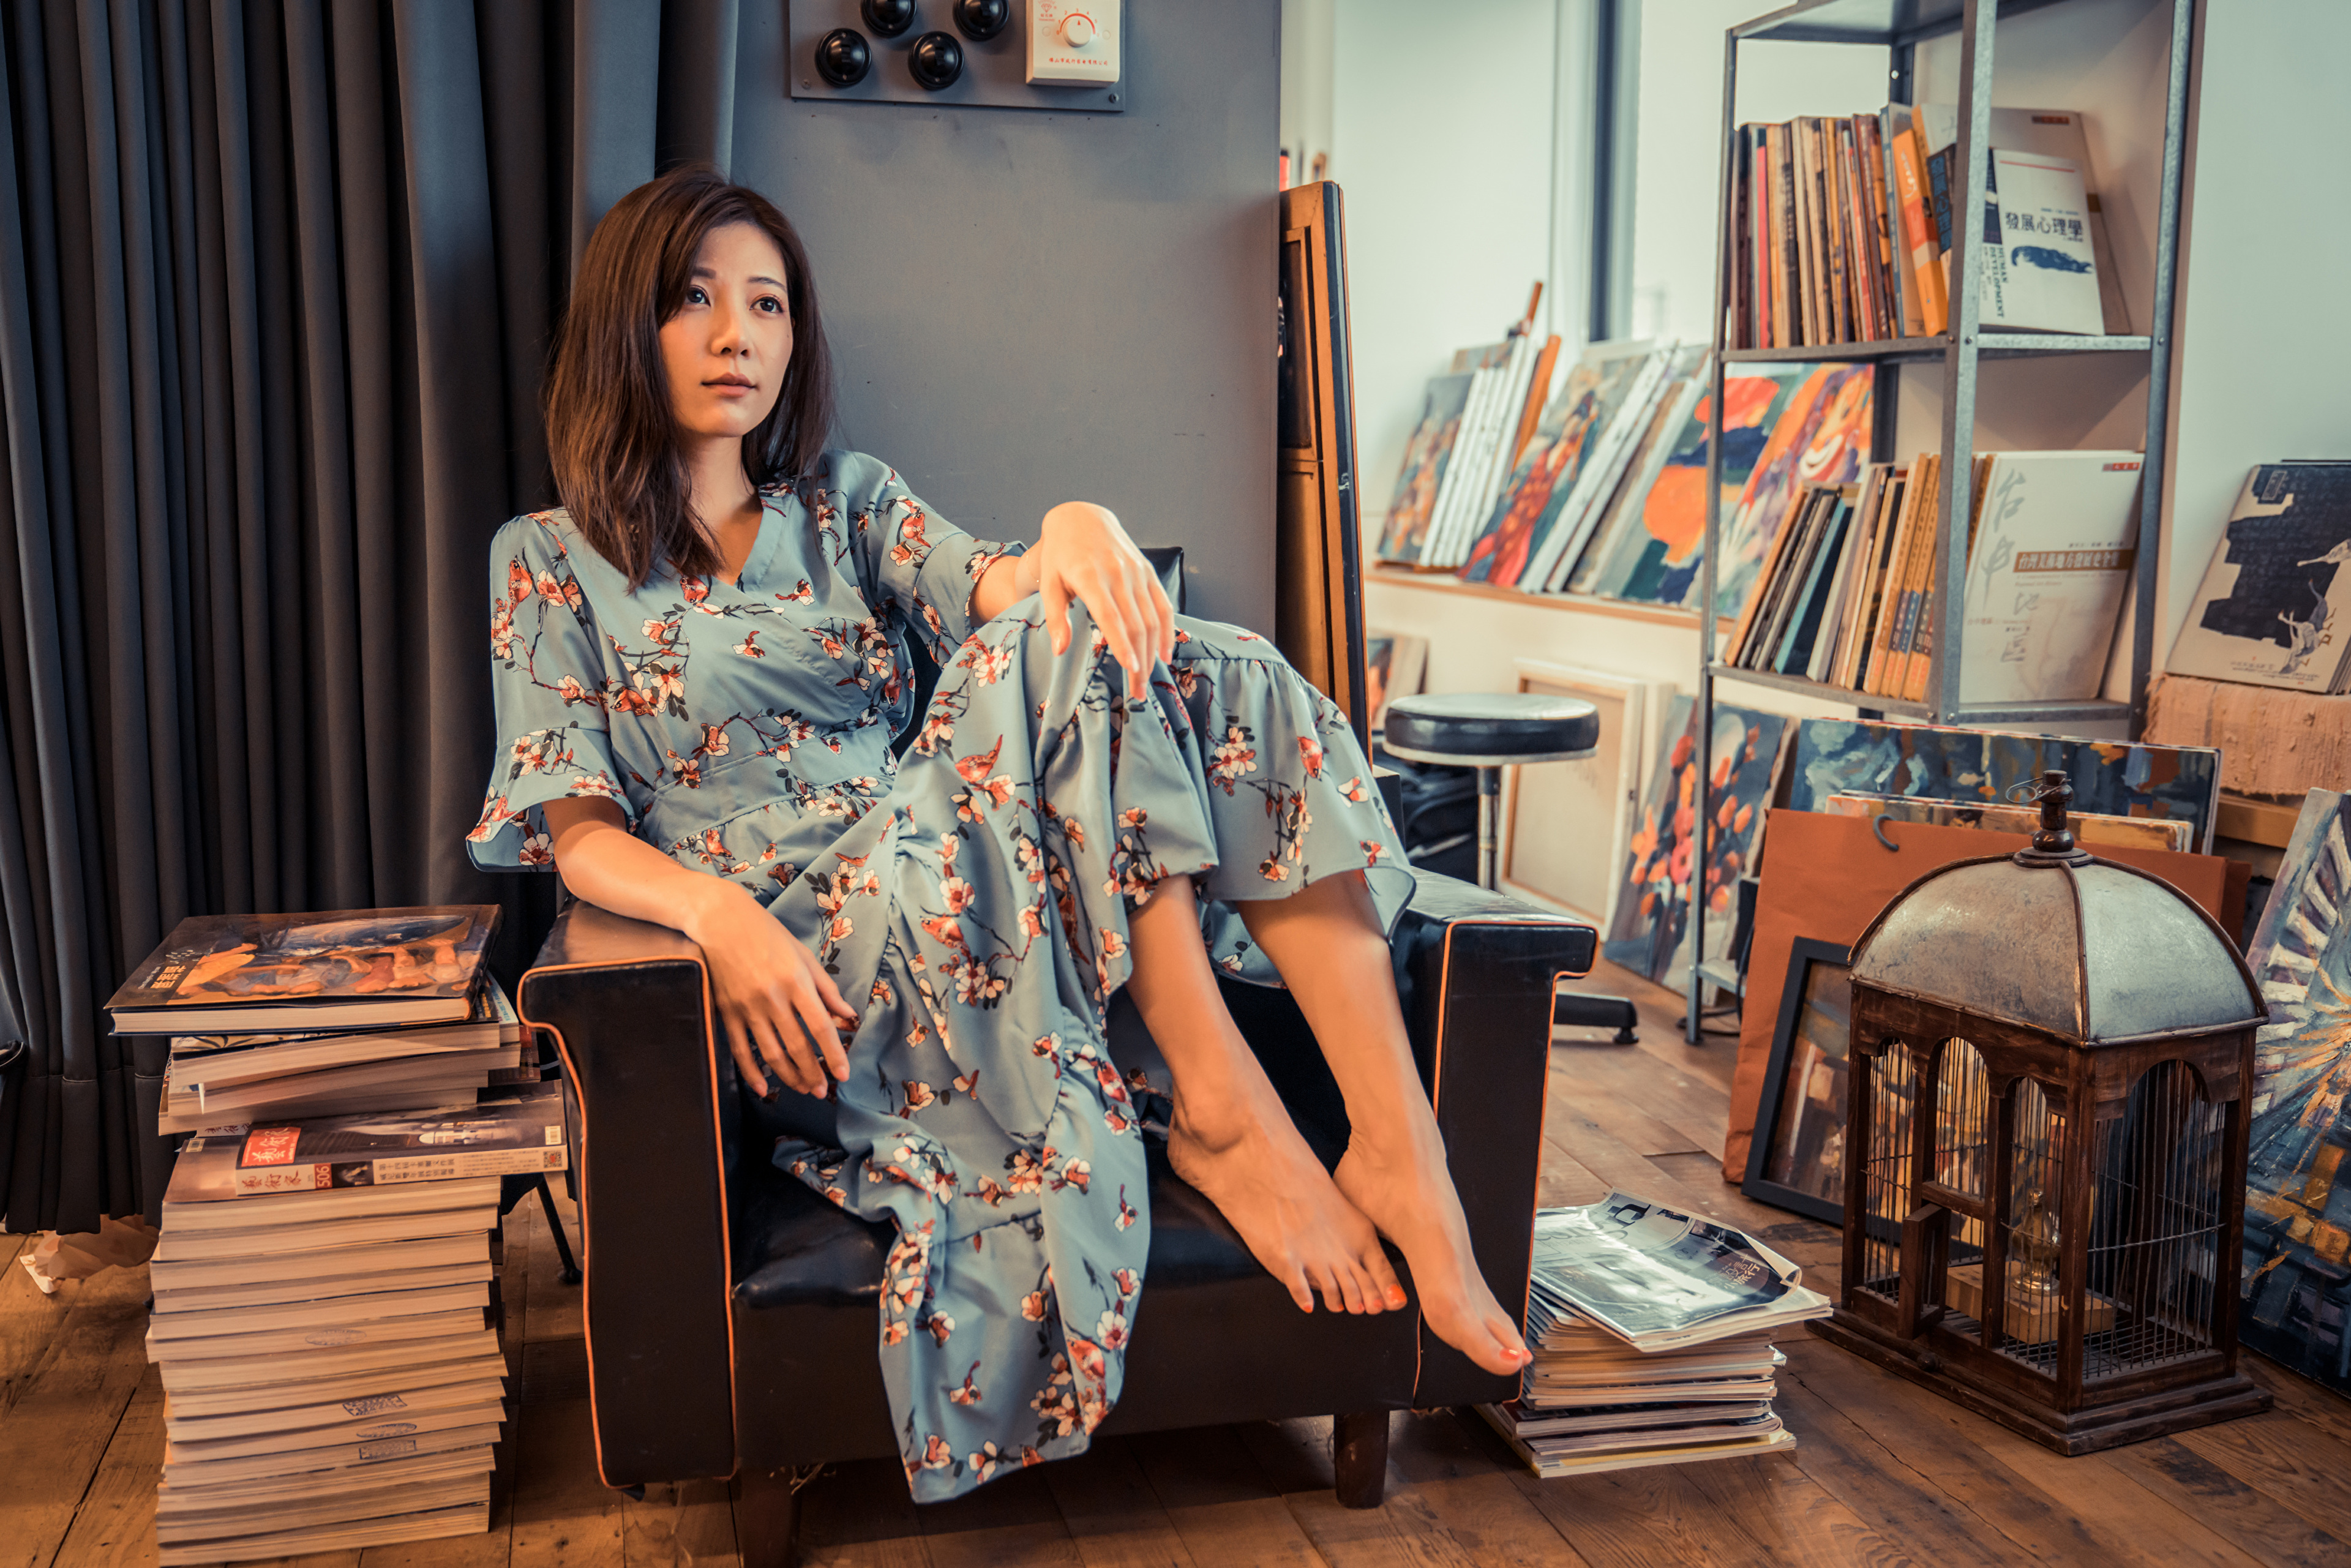 Asian Model Women Long Hair Dark Hair Depth Of Field Sitting Barefoot Flower Dress Chair Books Magaz 3840x2561